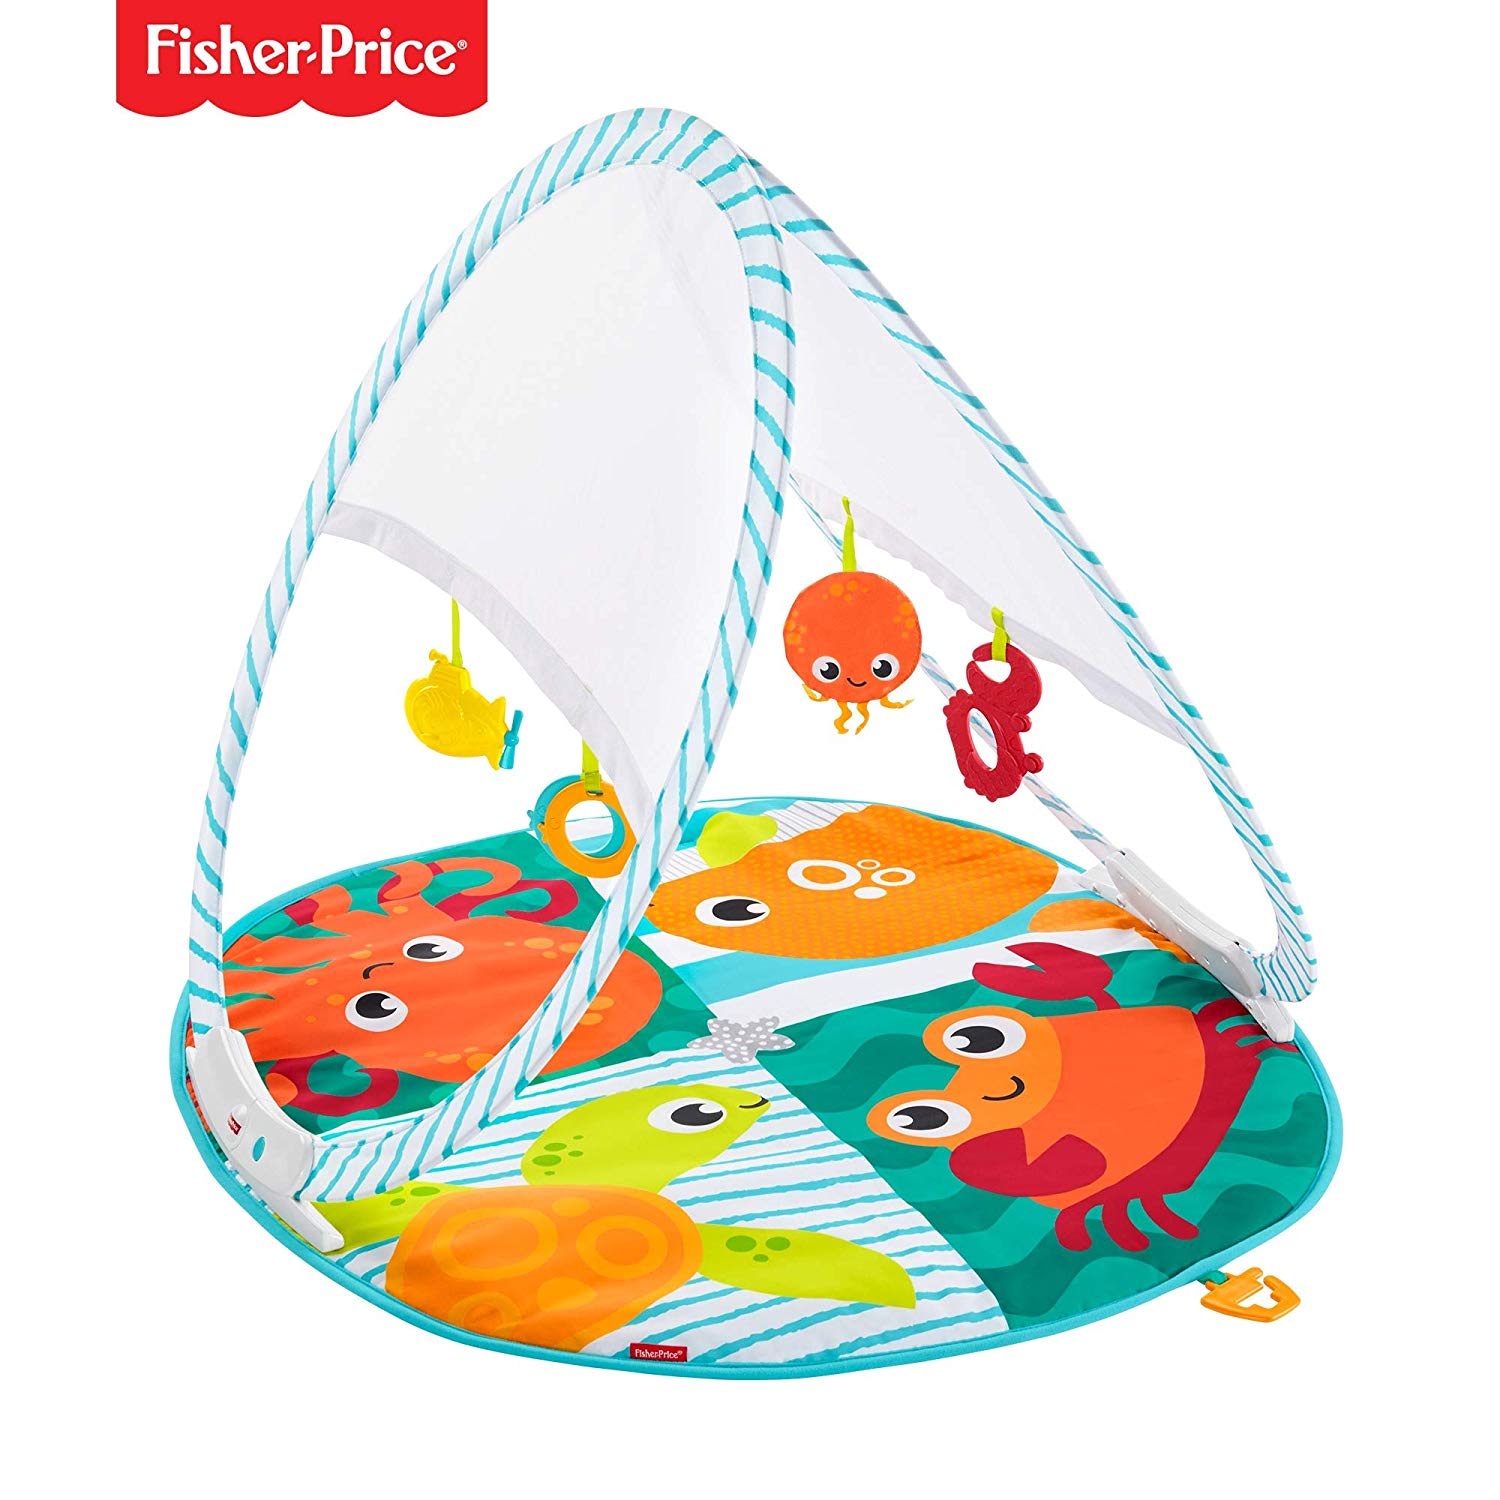 Fisher Price Fisher-Price FXC15 Fisher-Price FXC15 Foldable Sea Play Mat - Multicoloured